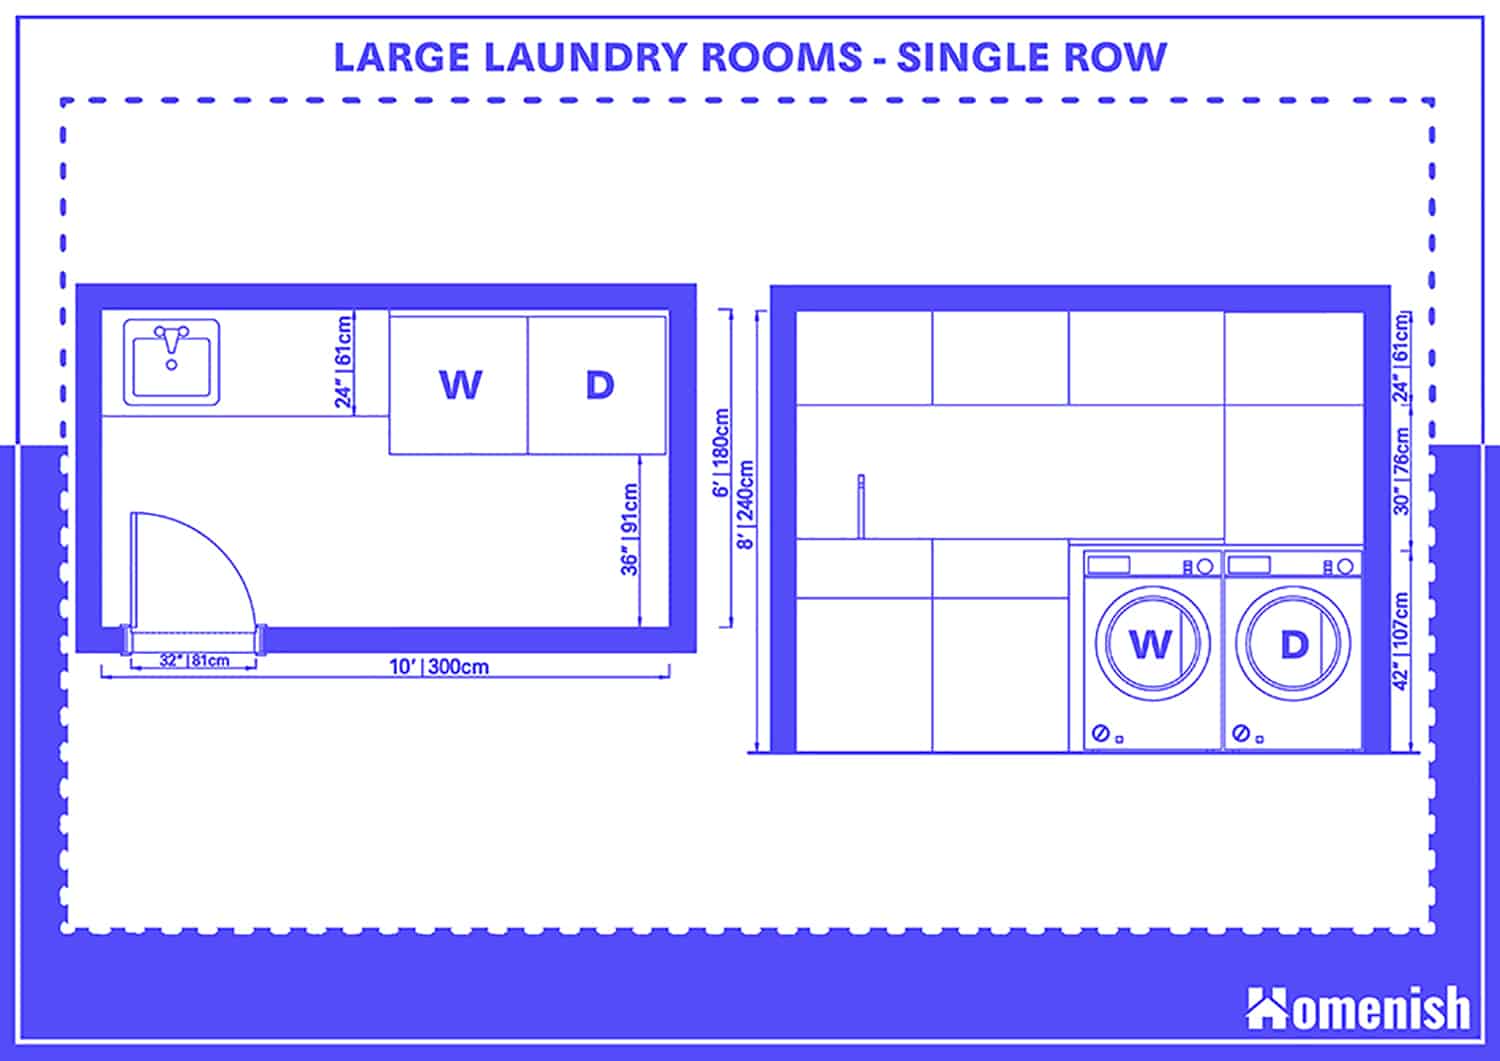 Large Laundry Room - Single Row